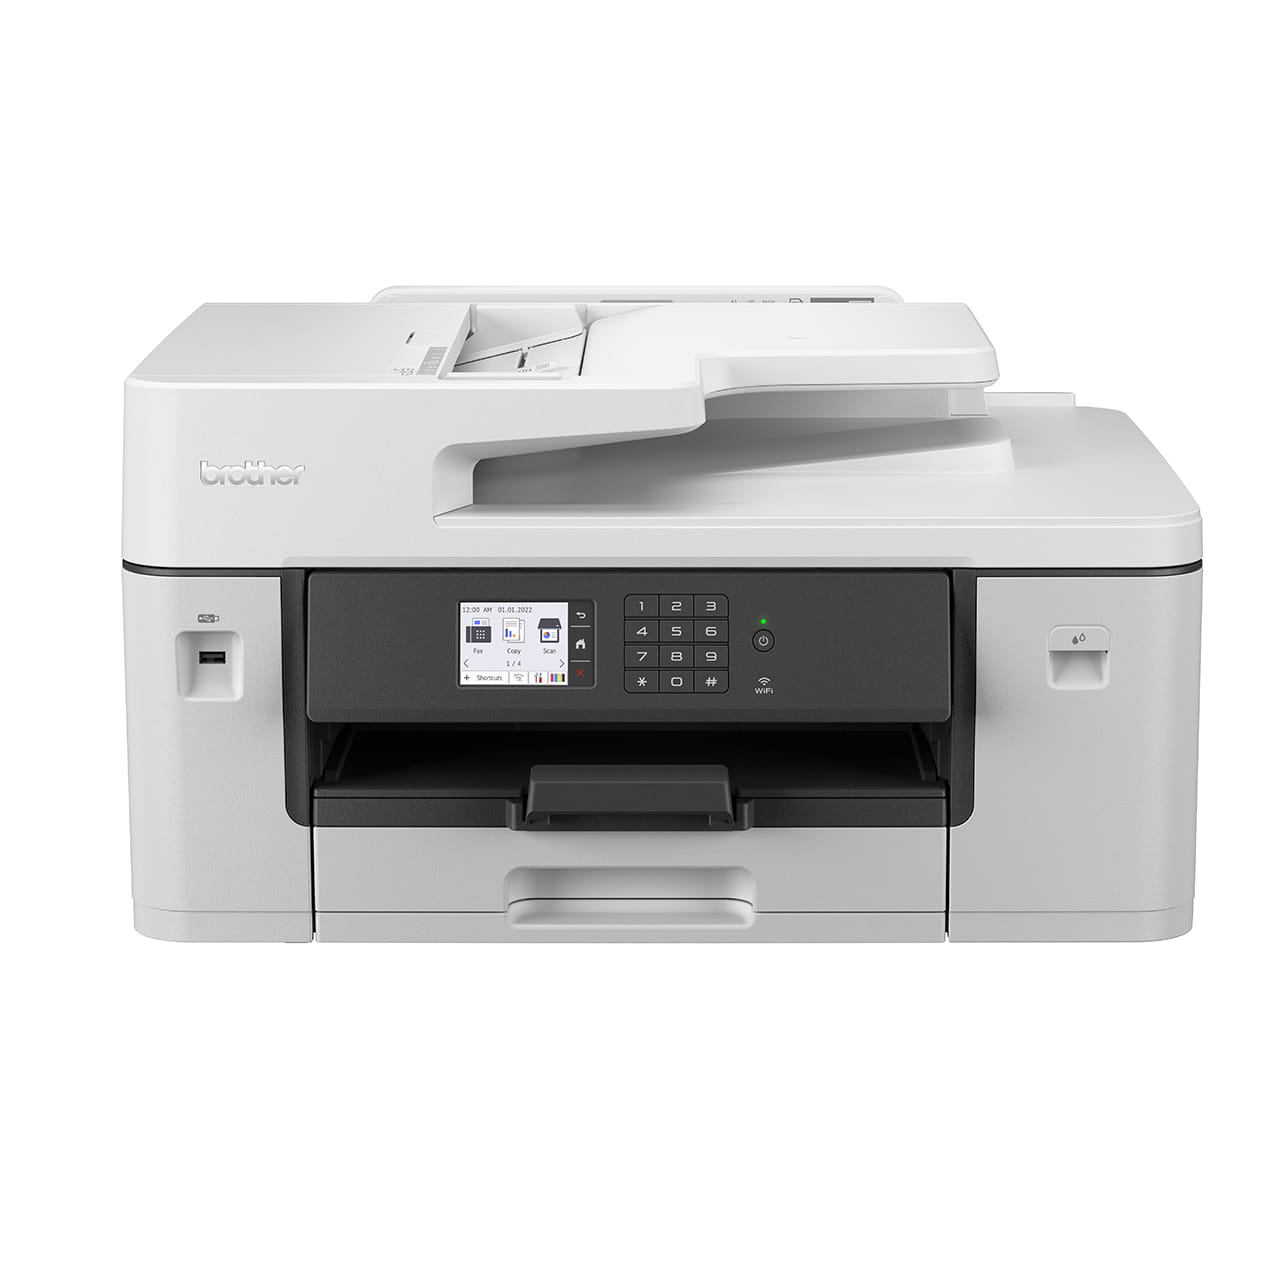 MFC-J3540DW A3 Business Printer